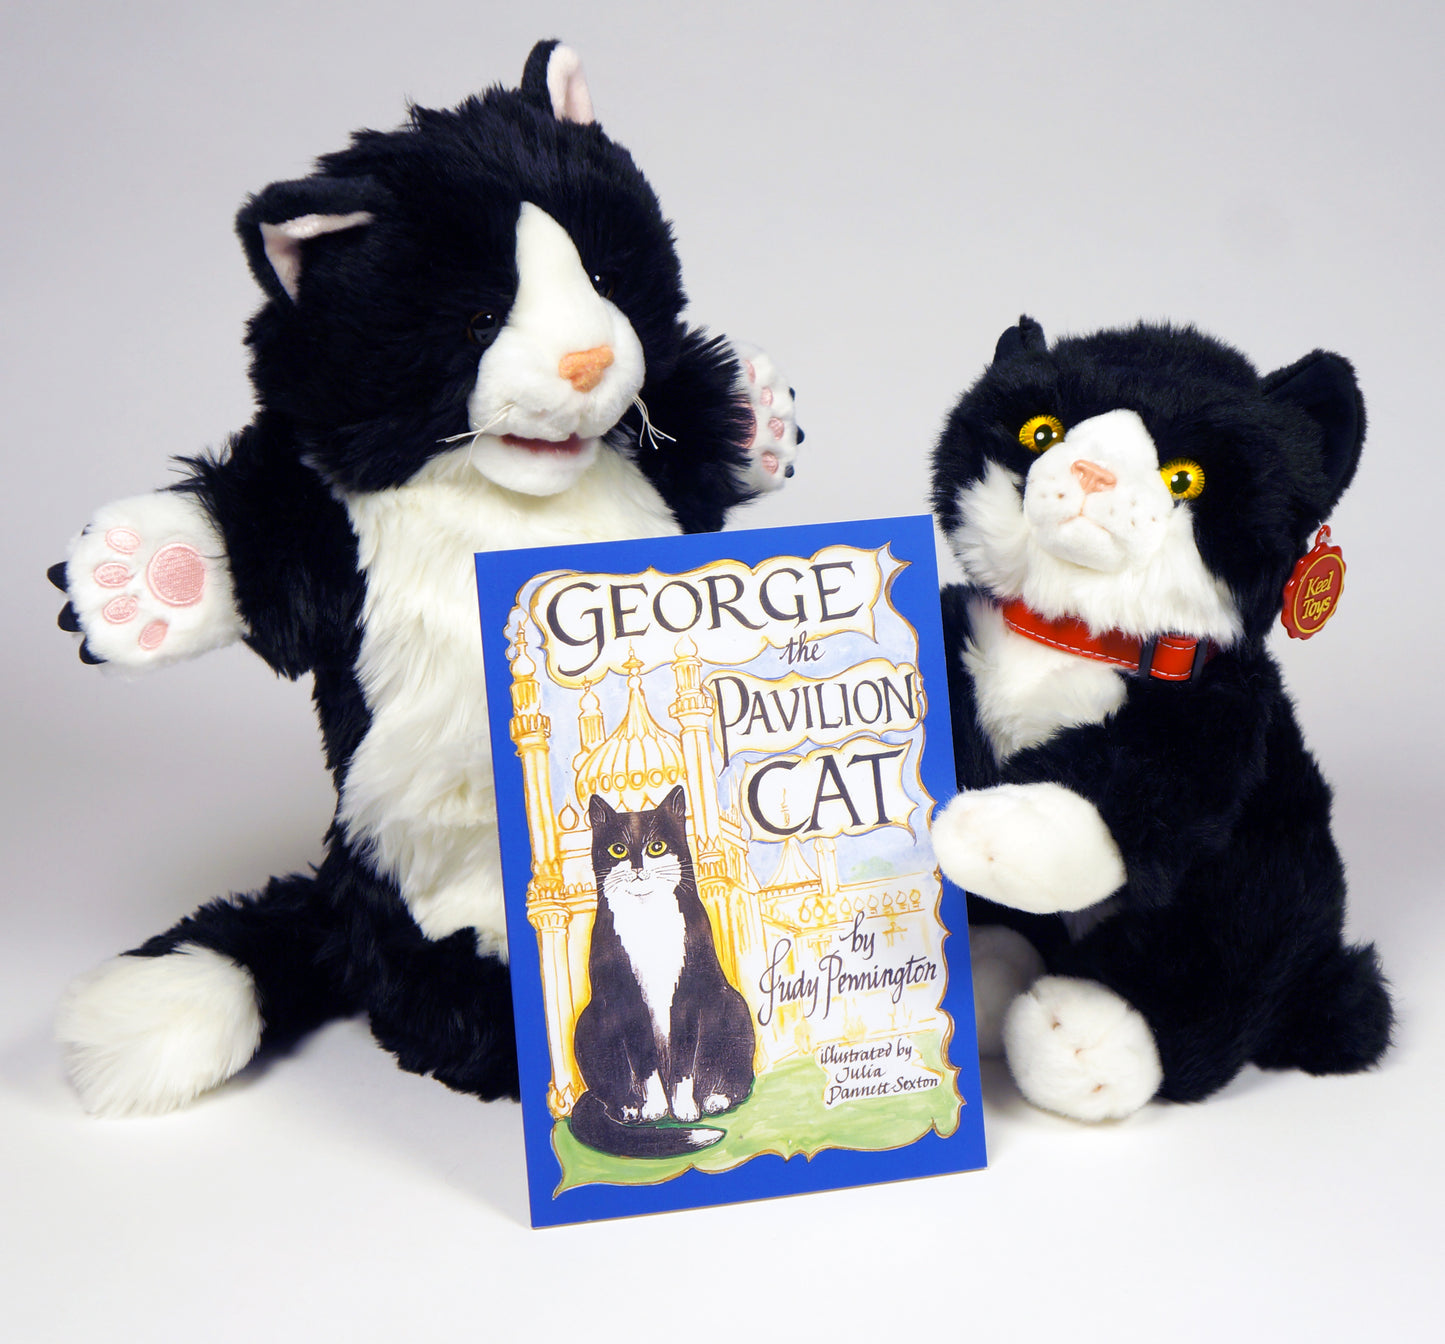 George the Pavilion Cat